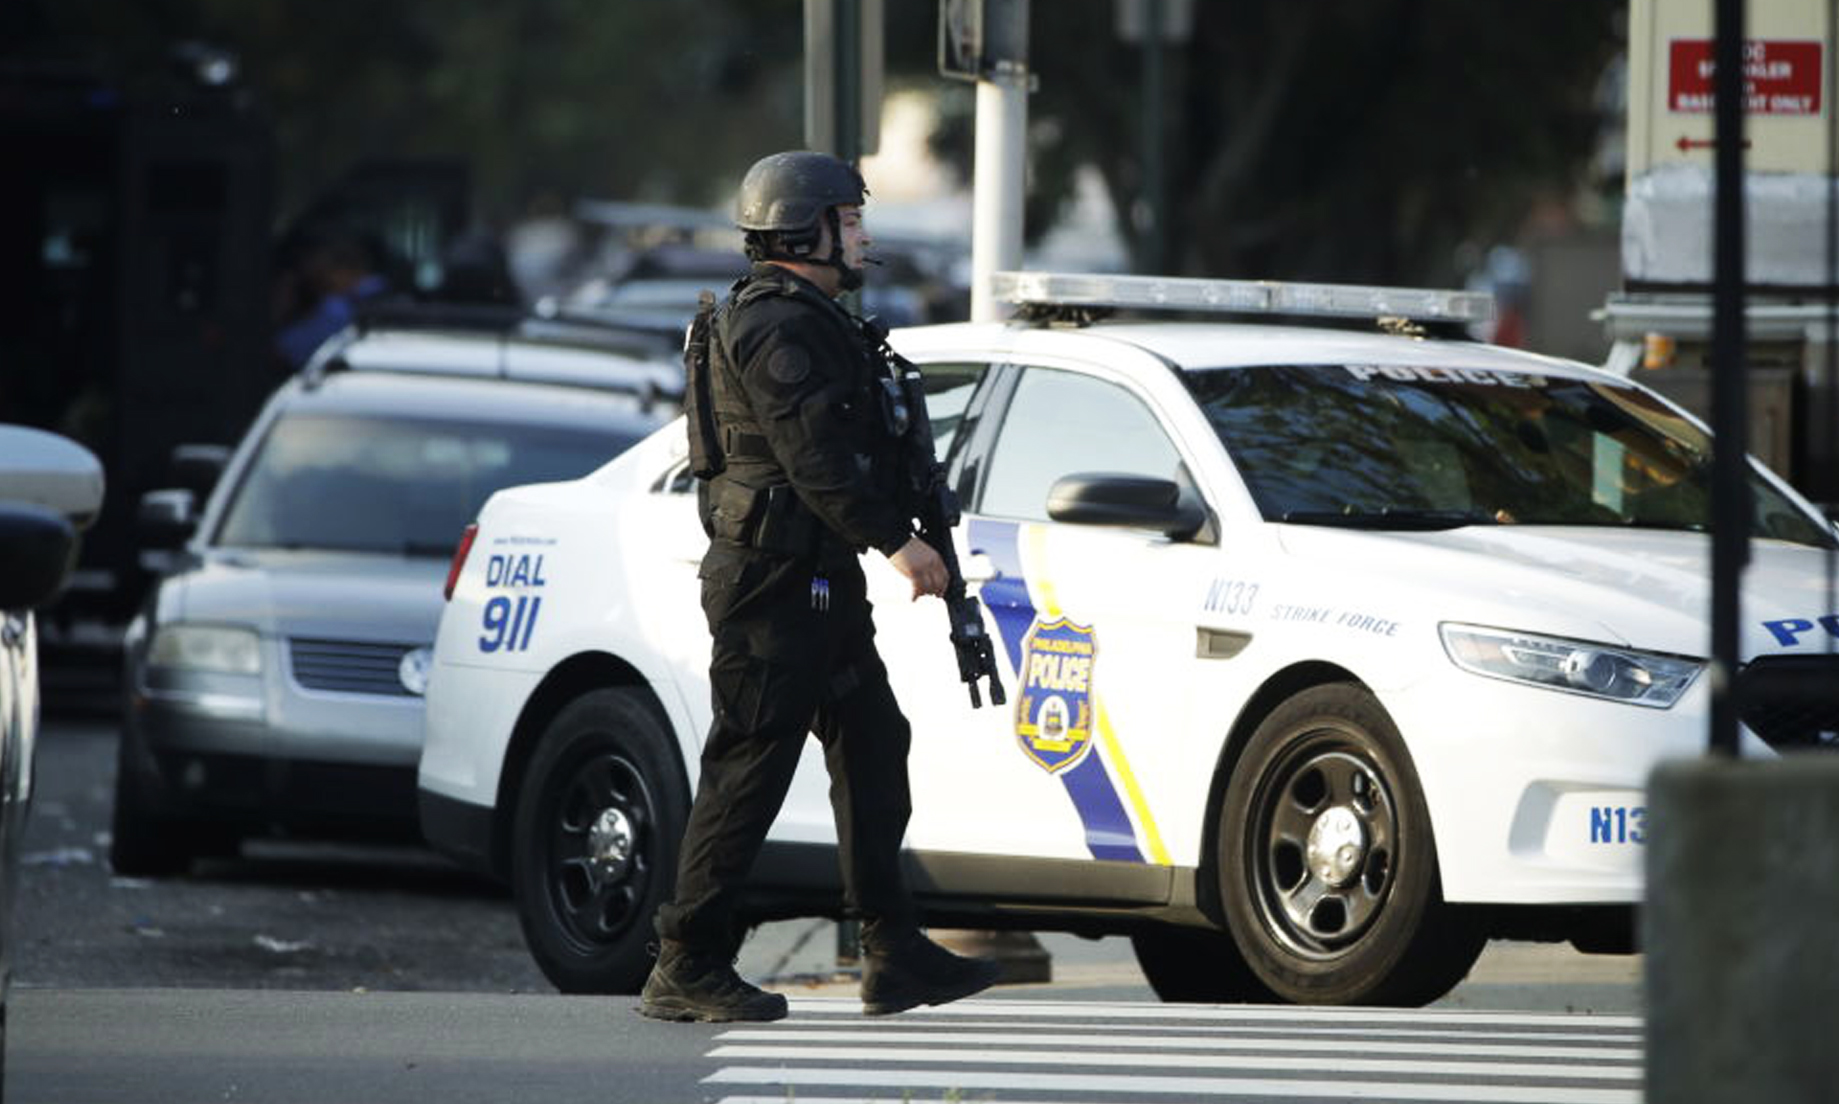 At least 6 police officers shot in U.S. city of Philadelphia